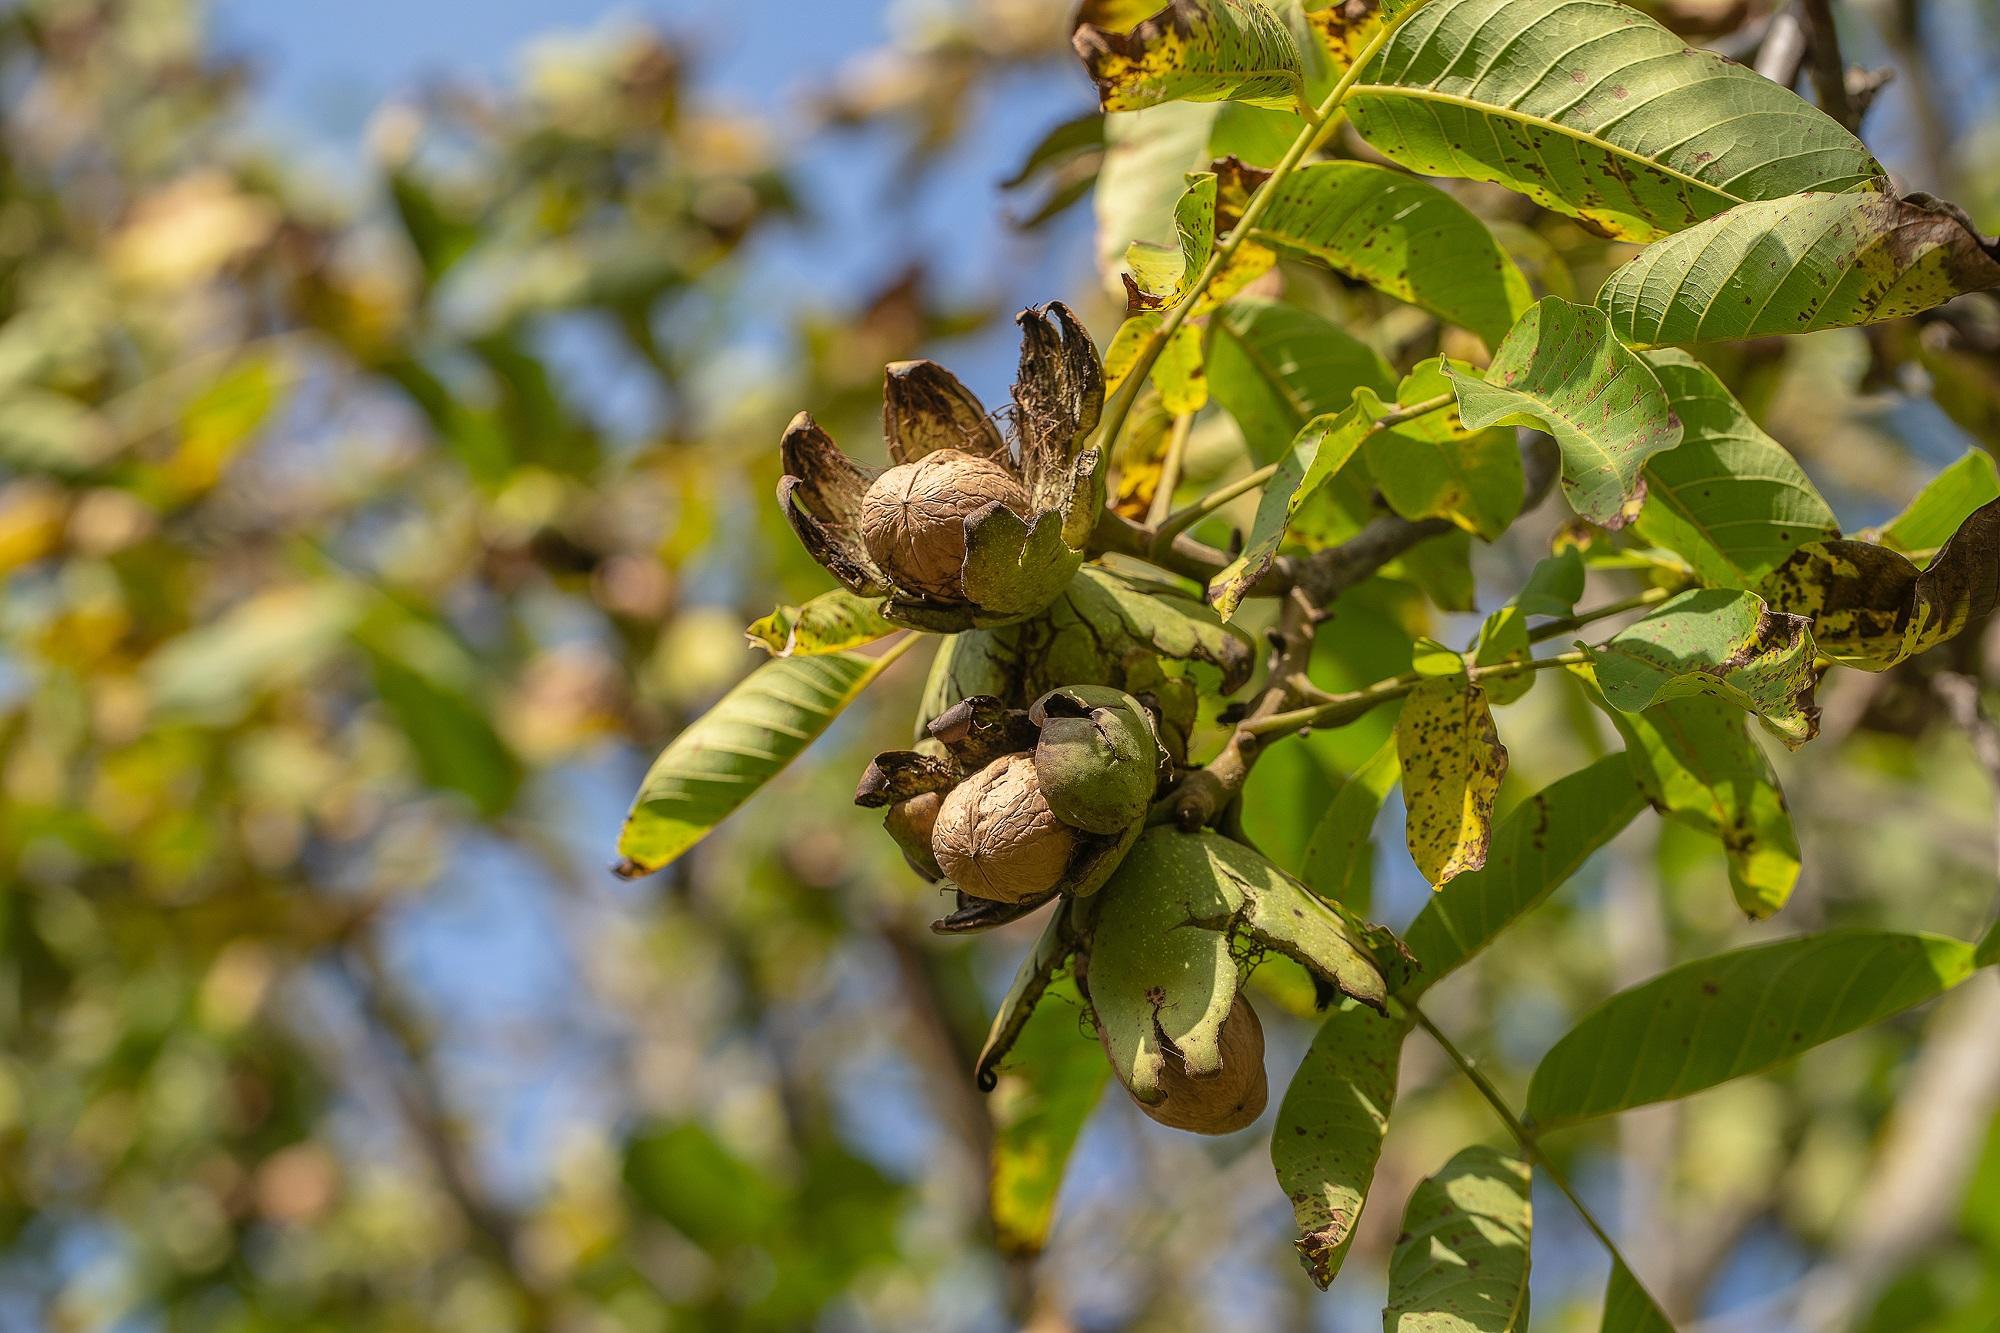 Walnuts on a walnut tree branch with browning foliage.